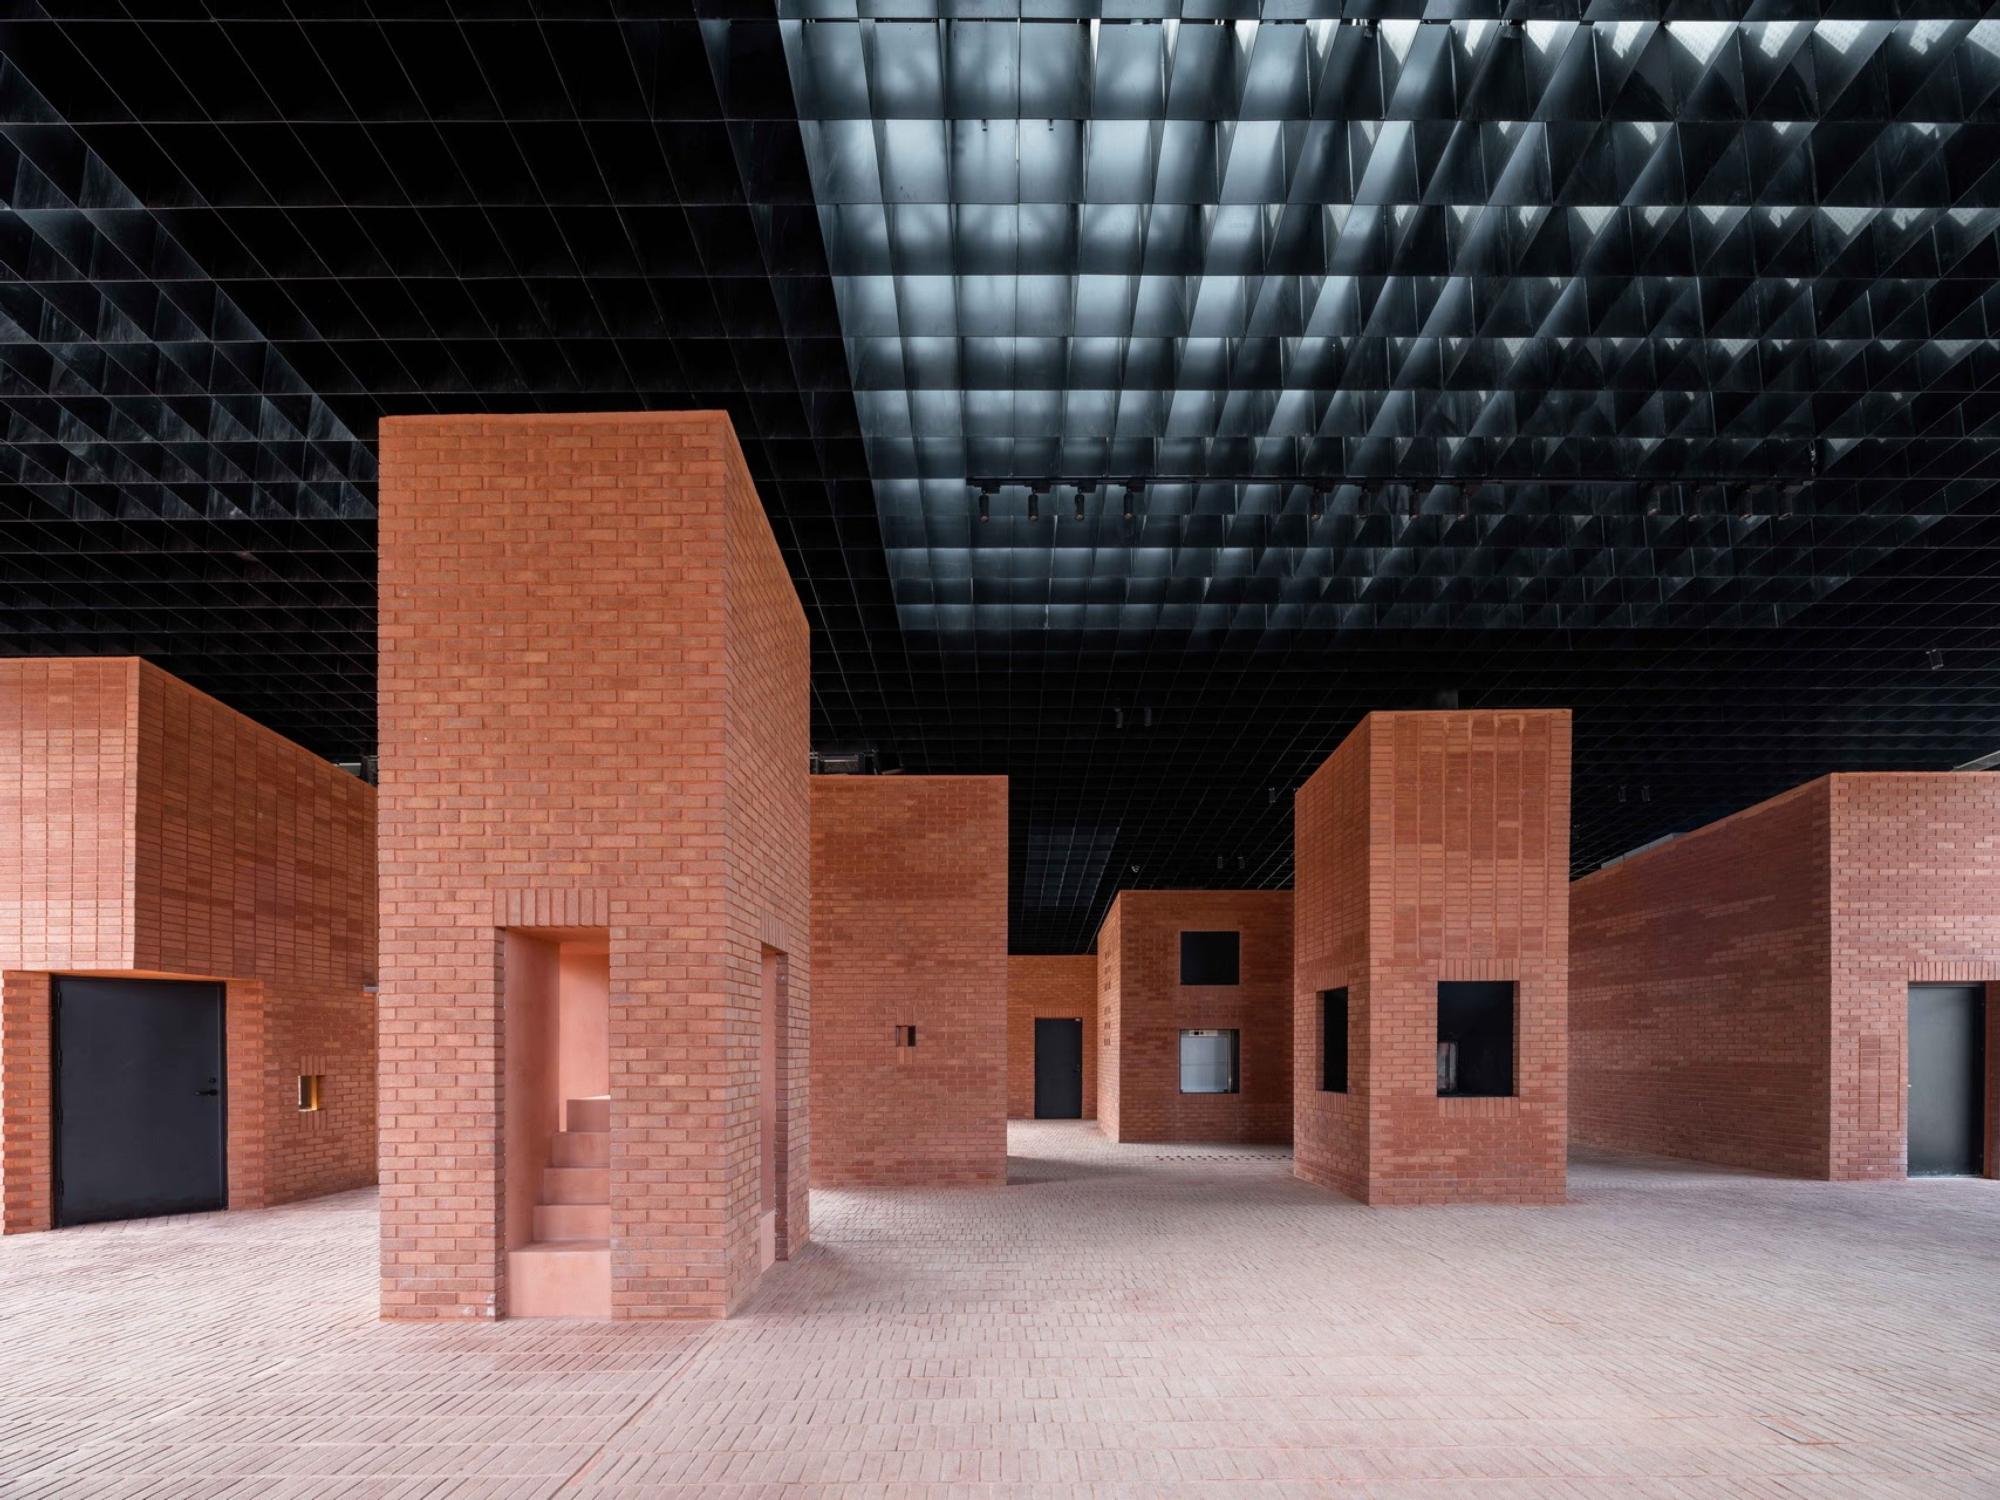 The red brick interior of the Art Center of Aranya